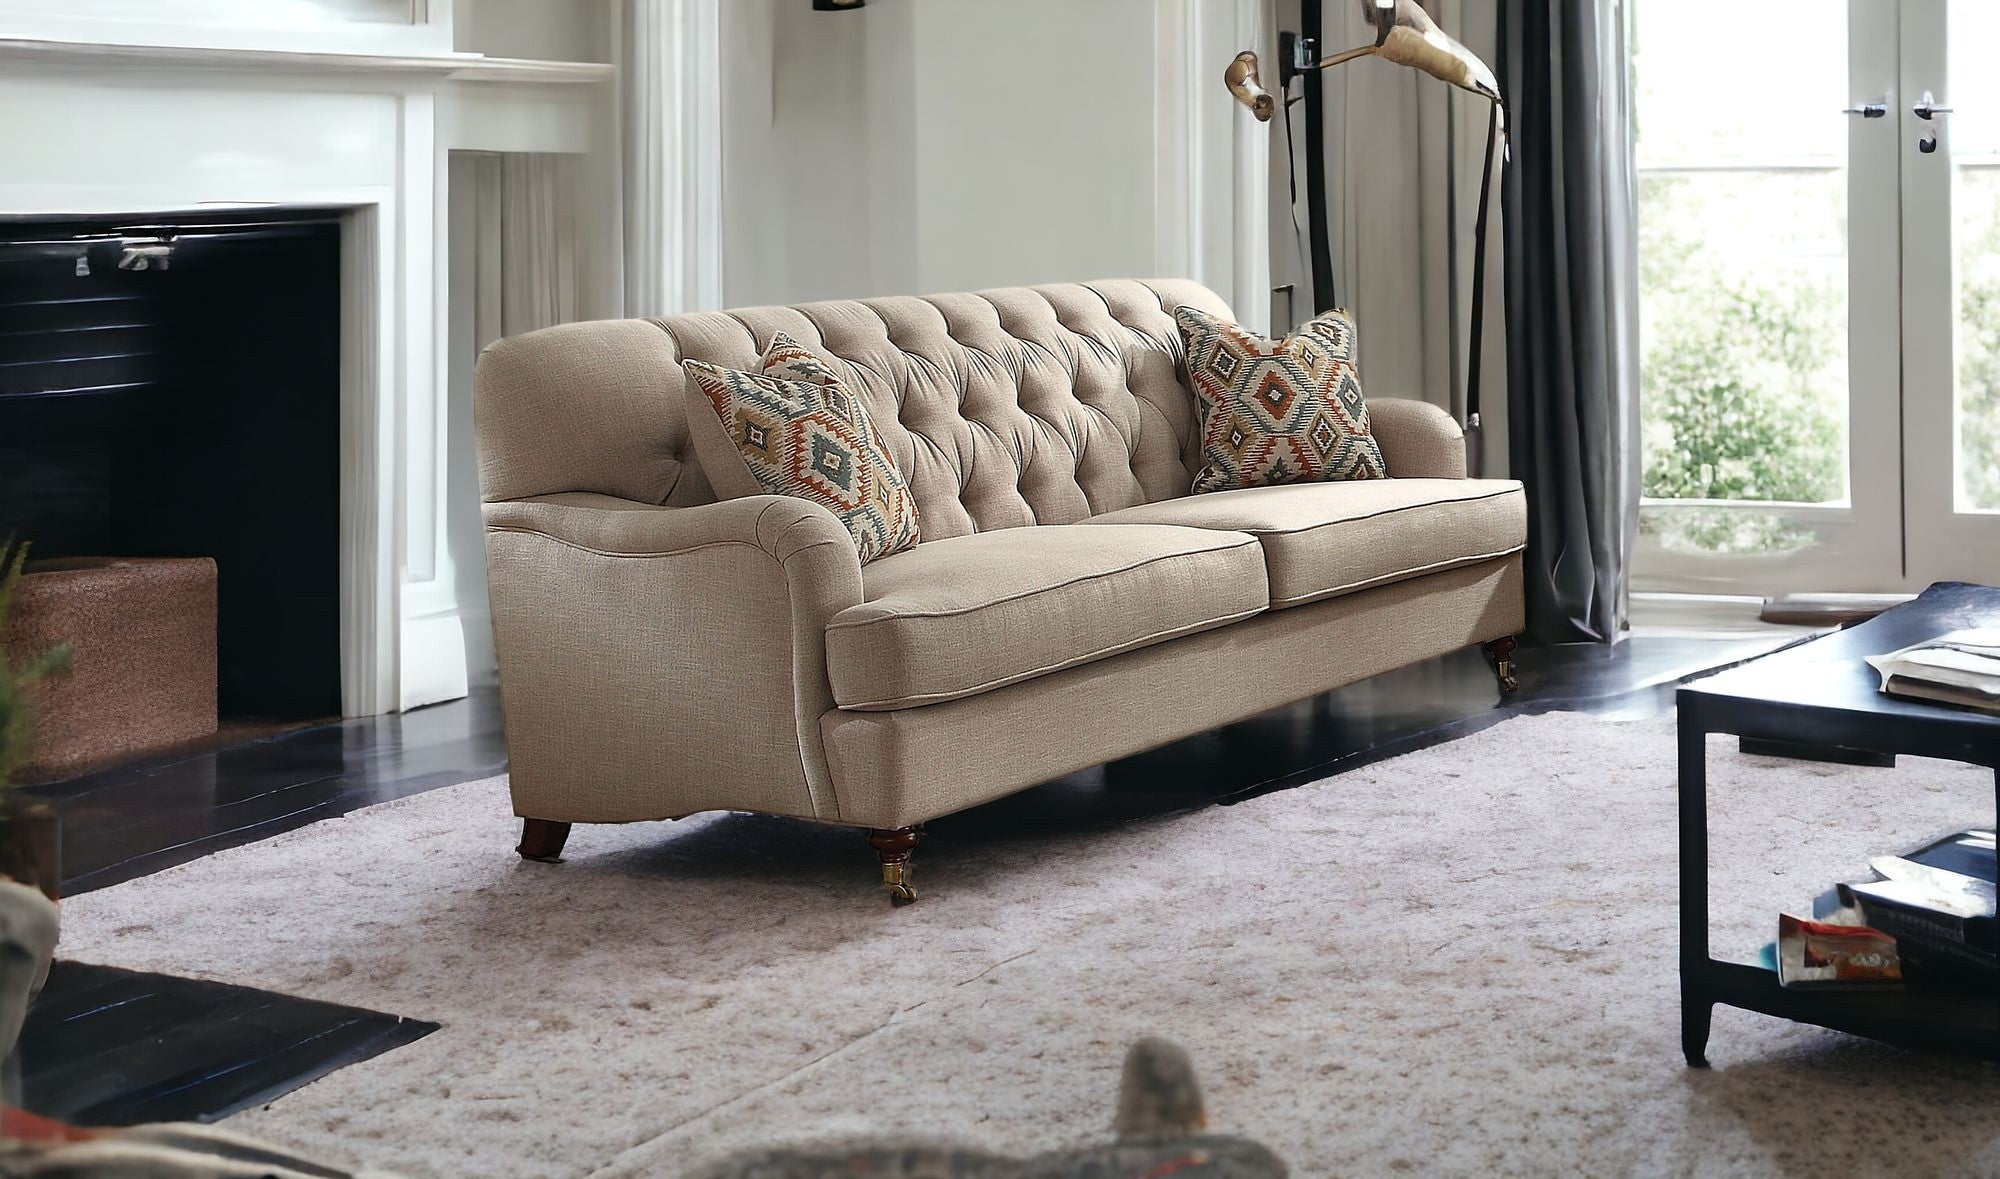 38" X 85" X 37" Beige Fabric Upholstery Sofa w2 Pillows